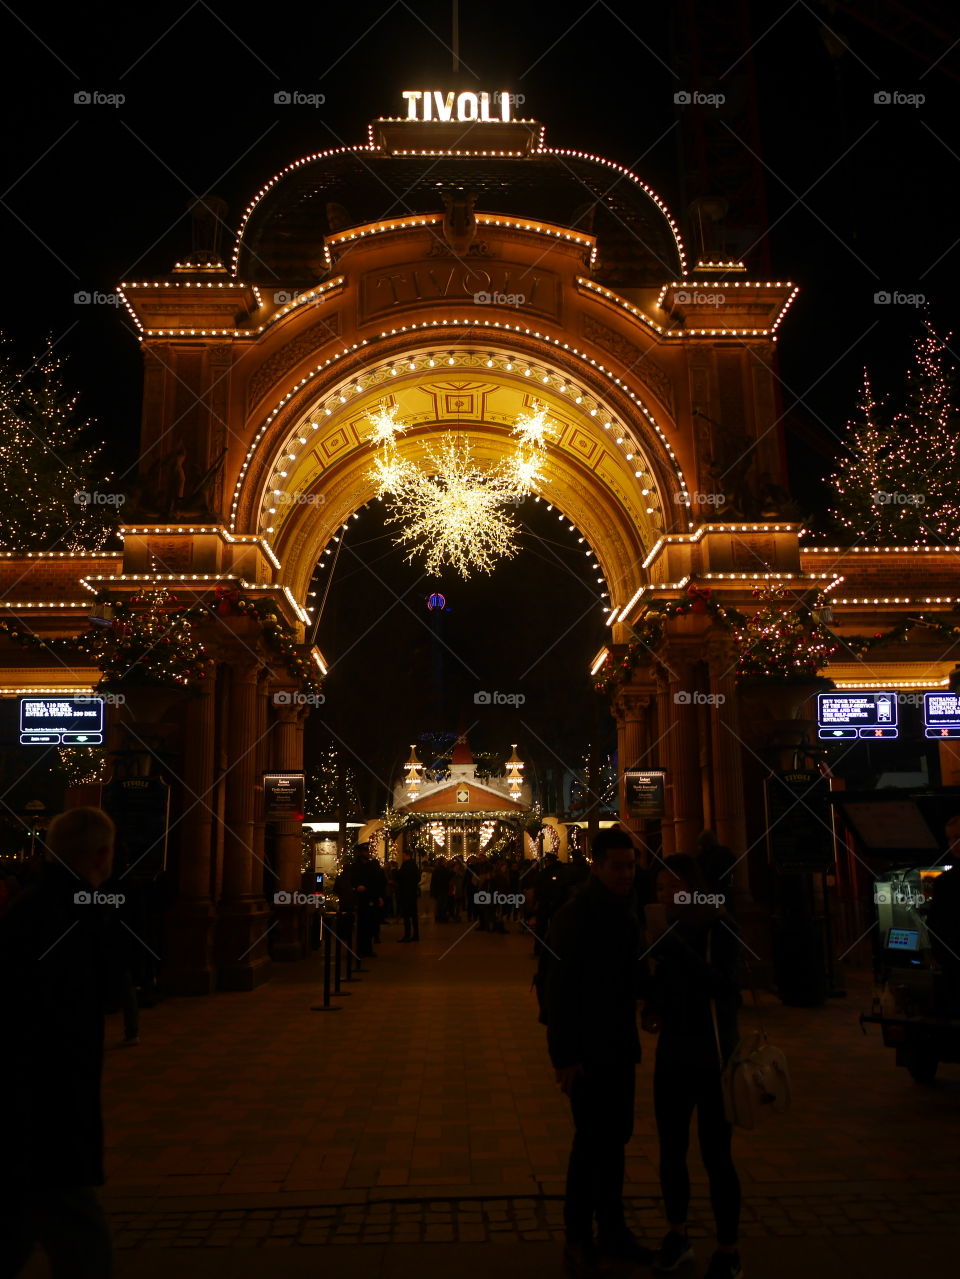 Tivoli in Christmas lights
